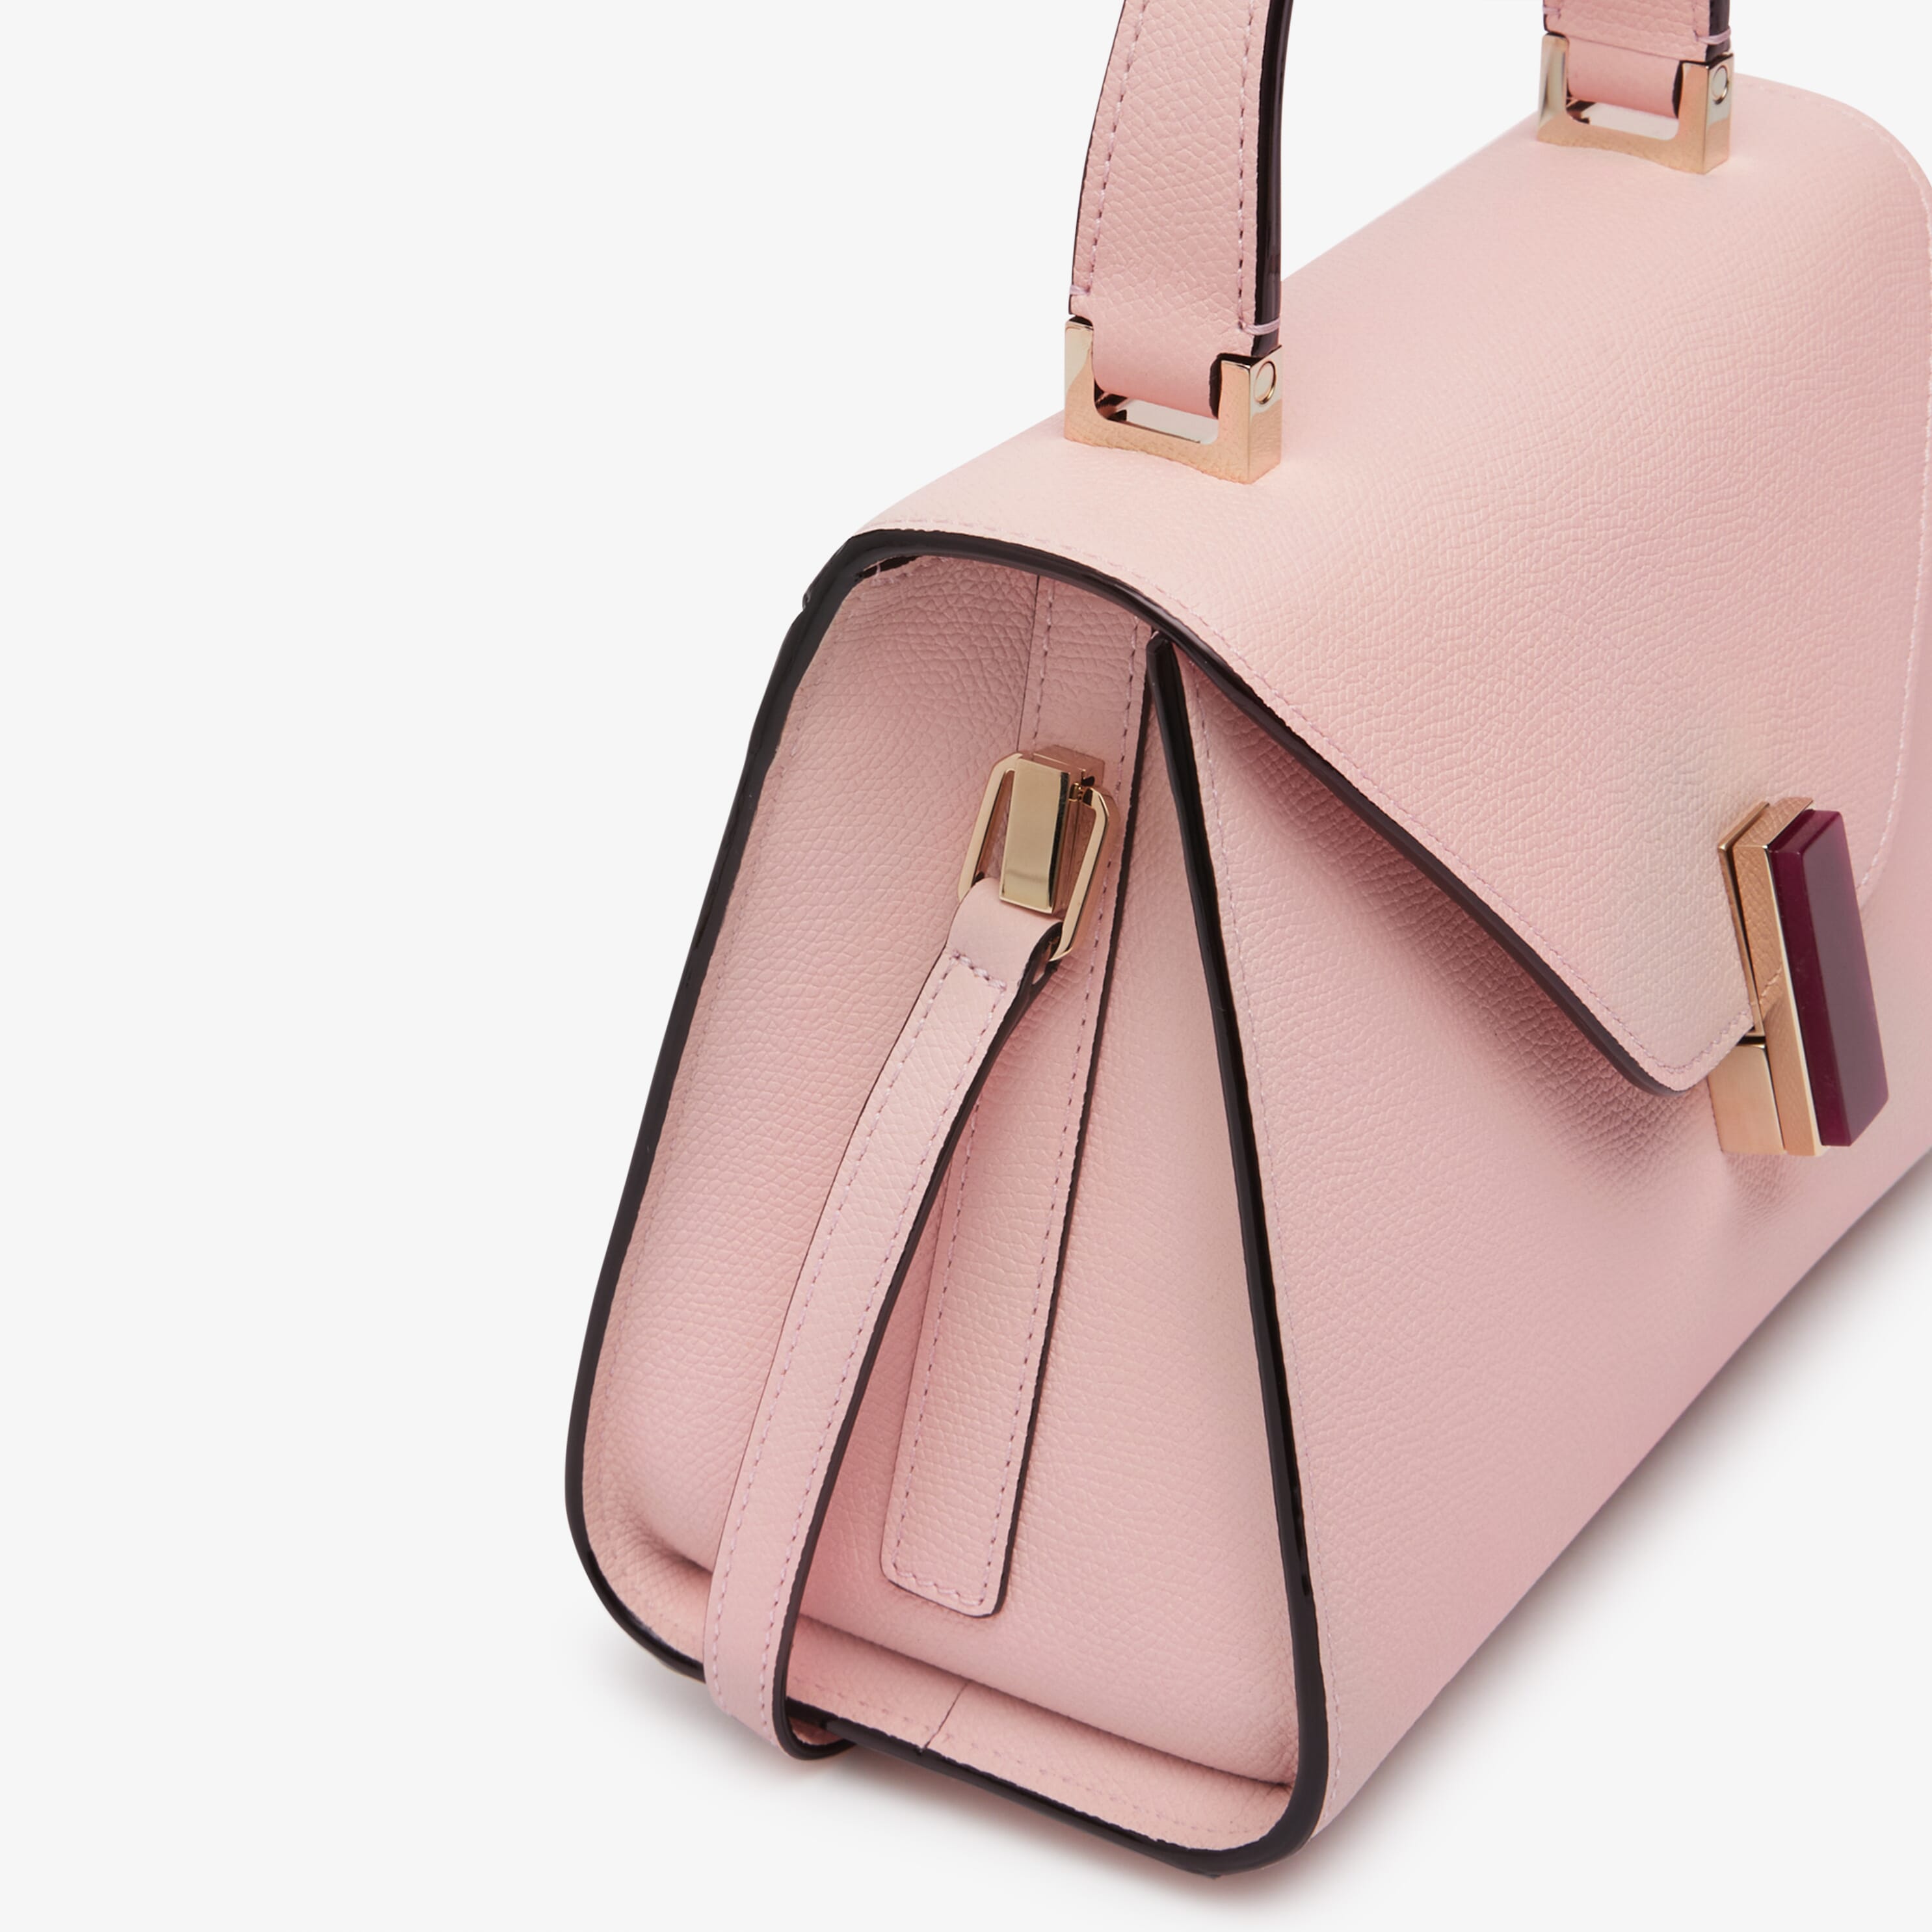 Iside Quarzo Top Handle Mini Bag - Peony Pink/Fuchsia Pink - Vitello VS - Valextra - 5